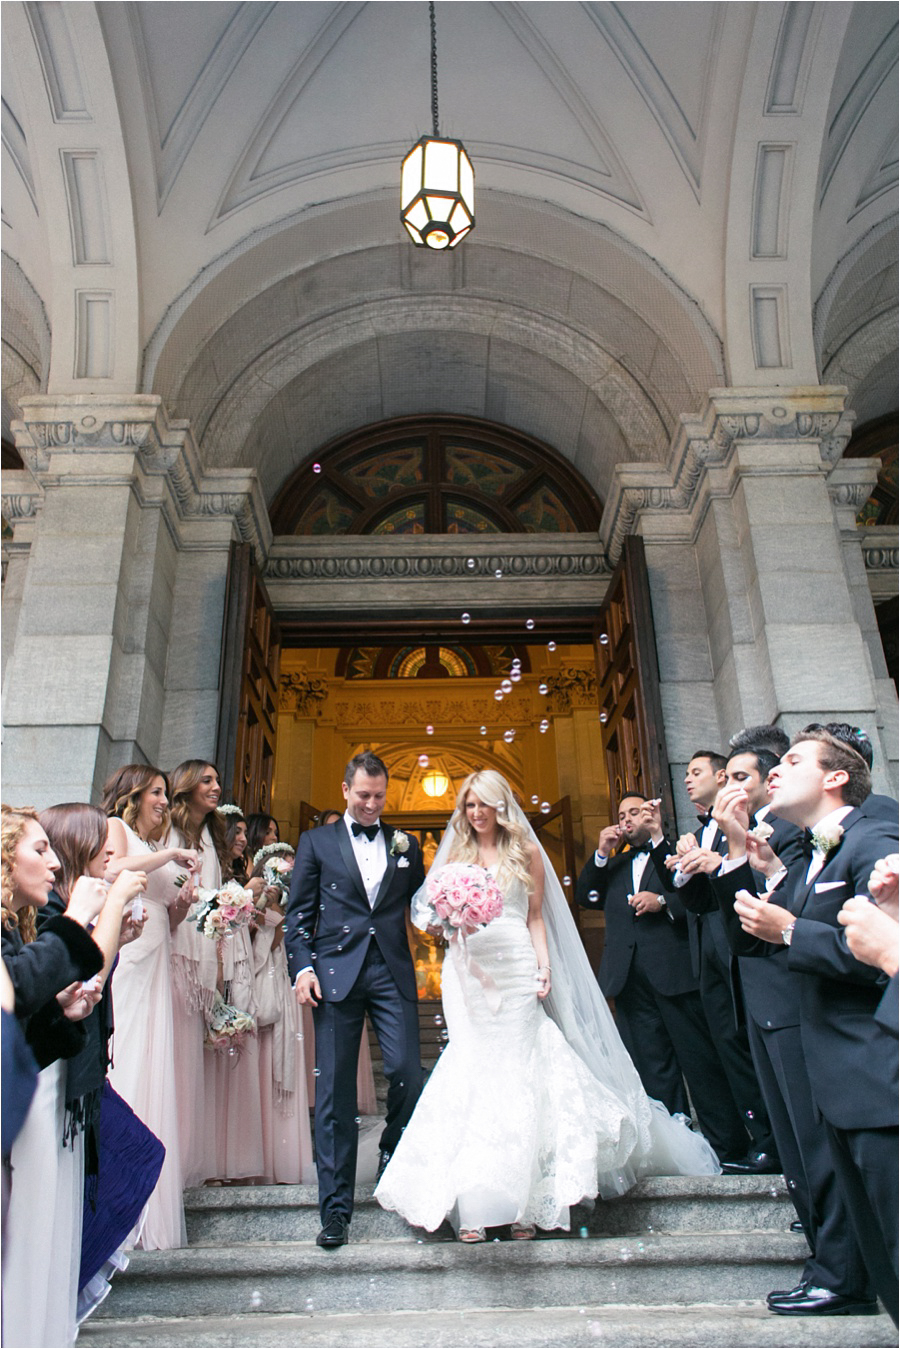 New York Public Library Wedding Photos - Amy Rizzuto Photography-43